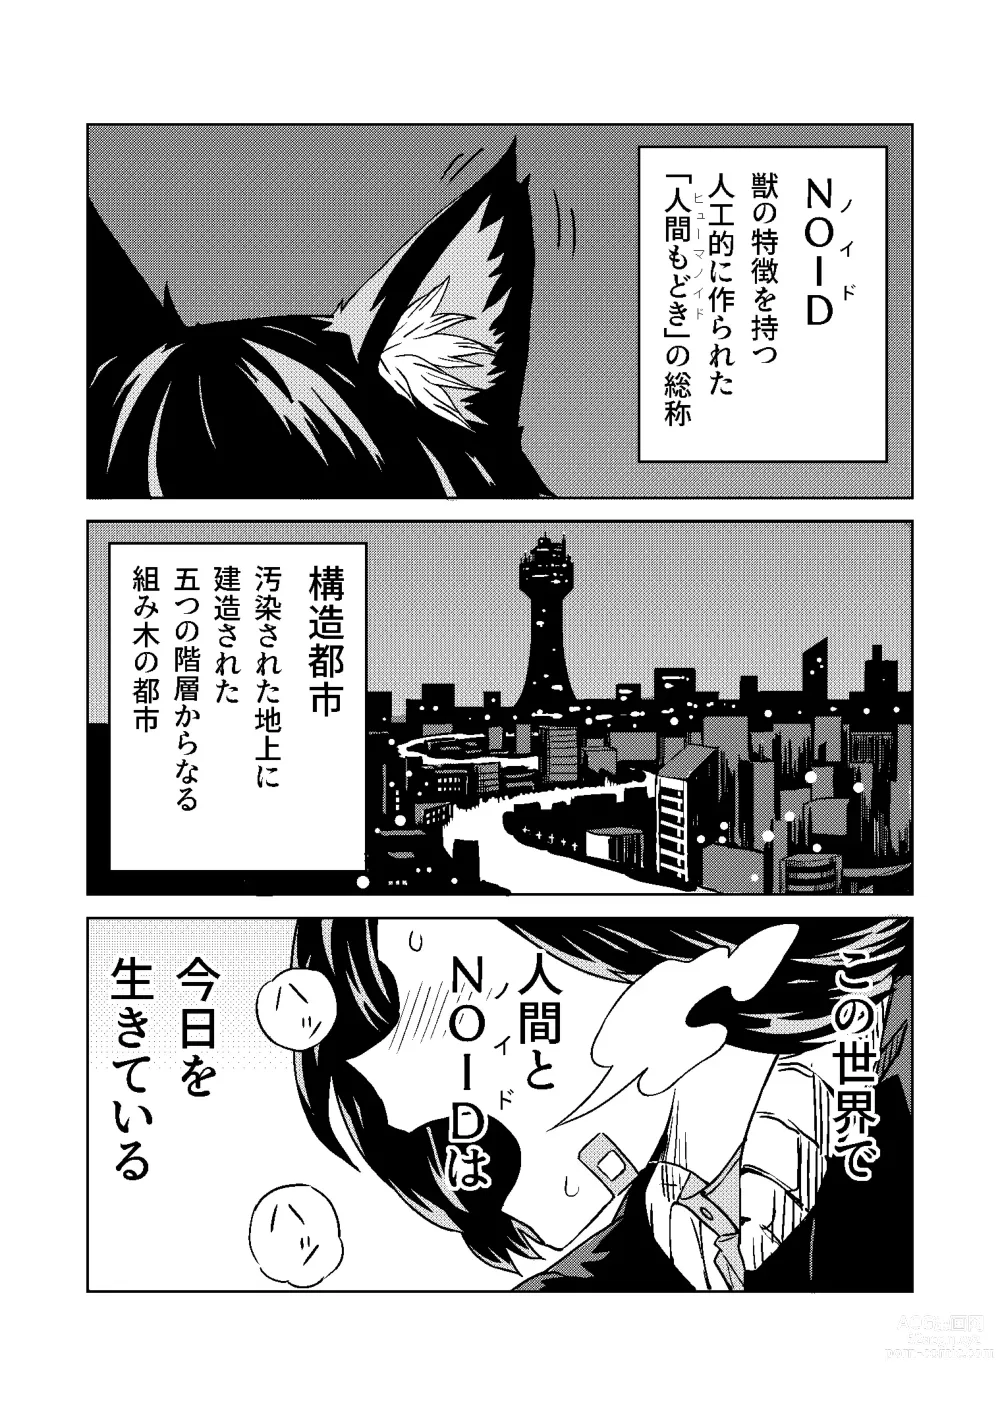 Page 2 of doujinshi NOID Episode:Moortje